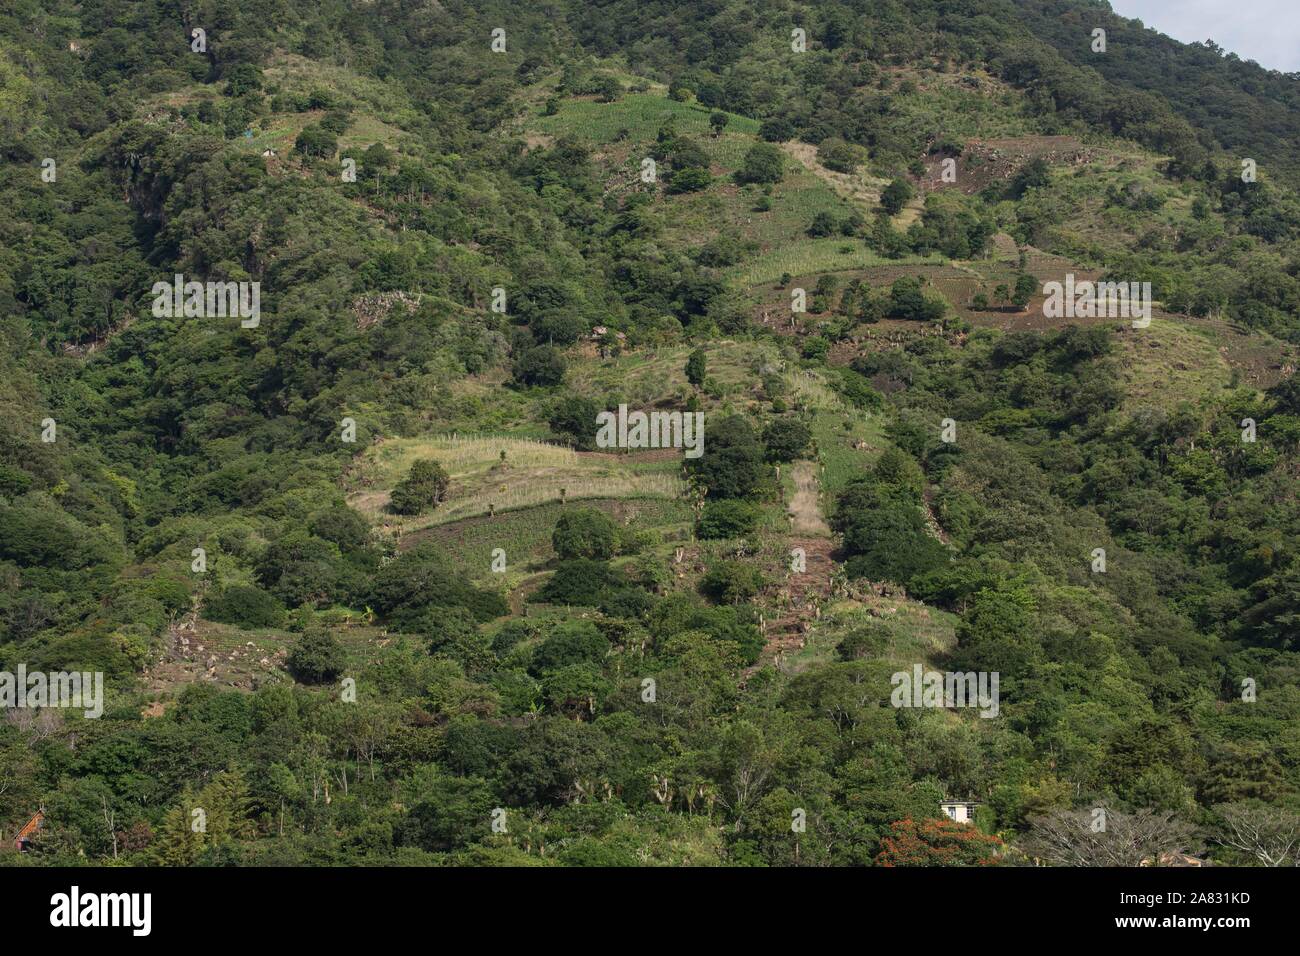 Small farm plots in the rich volcanic soil on the slopes of the Atitlan Volcano, Lake Atitlan, Guatemala. Stock Photo